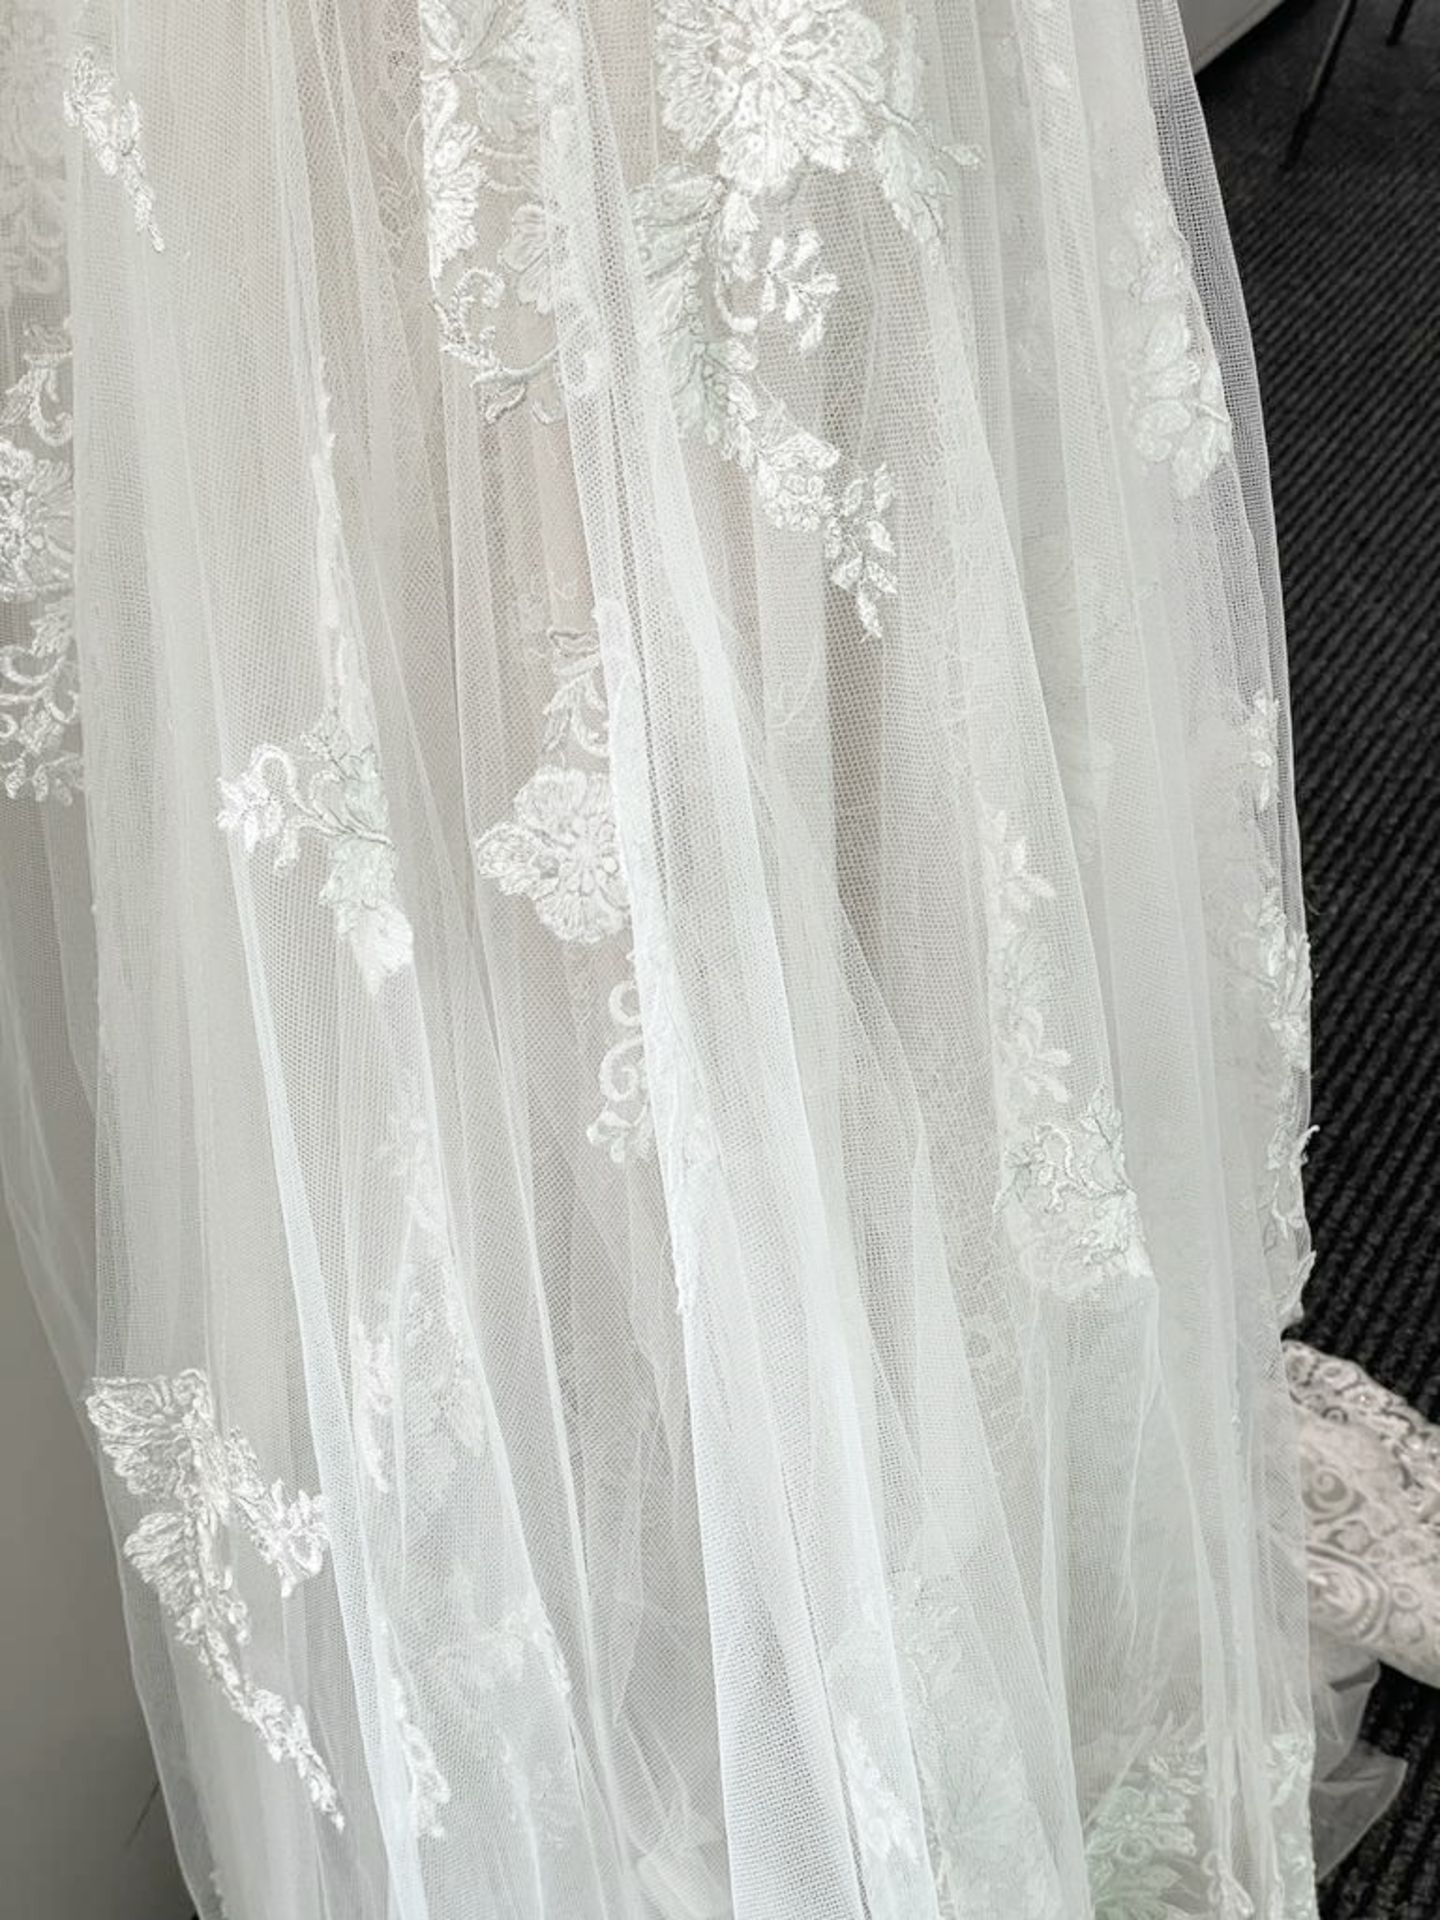 1 x DIANA LEGRANDE '7517' Designer Wedding Dress Bridal Gown - Size: UK 10 - Original RRP £1,800 - Image 10 of 18